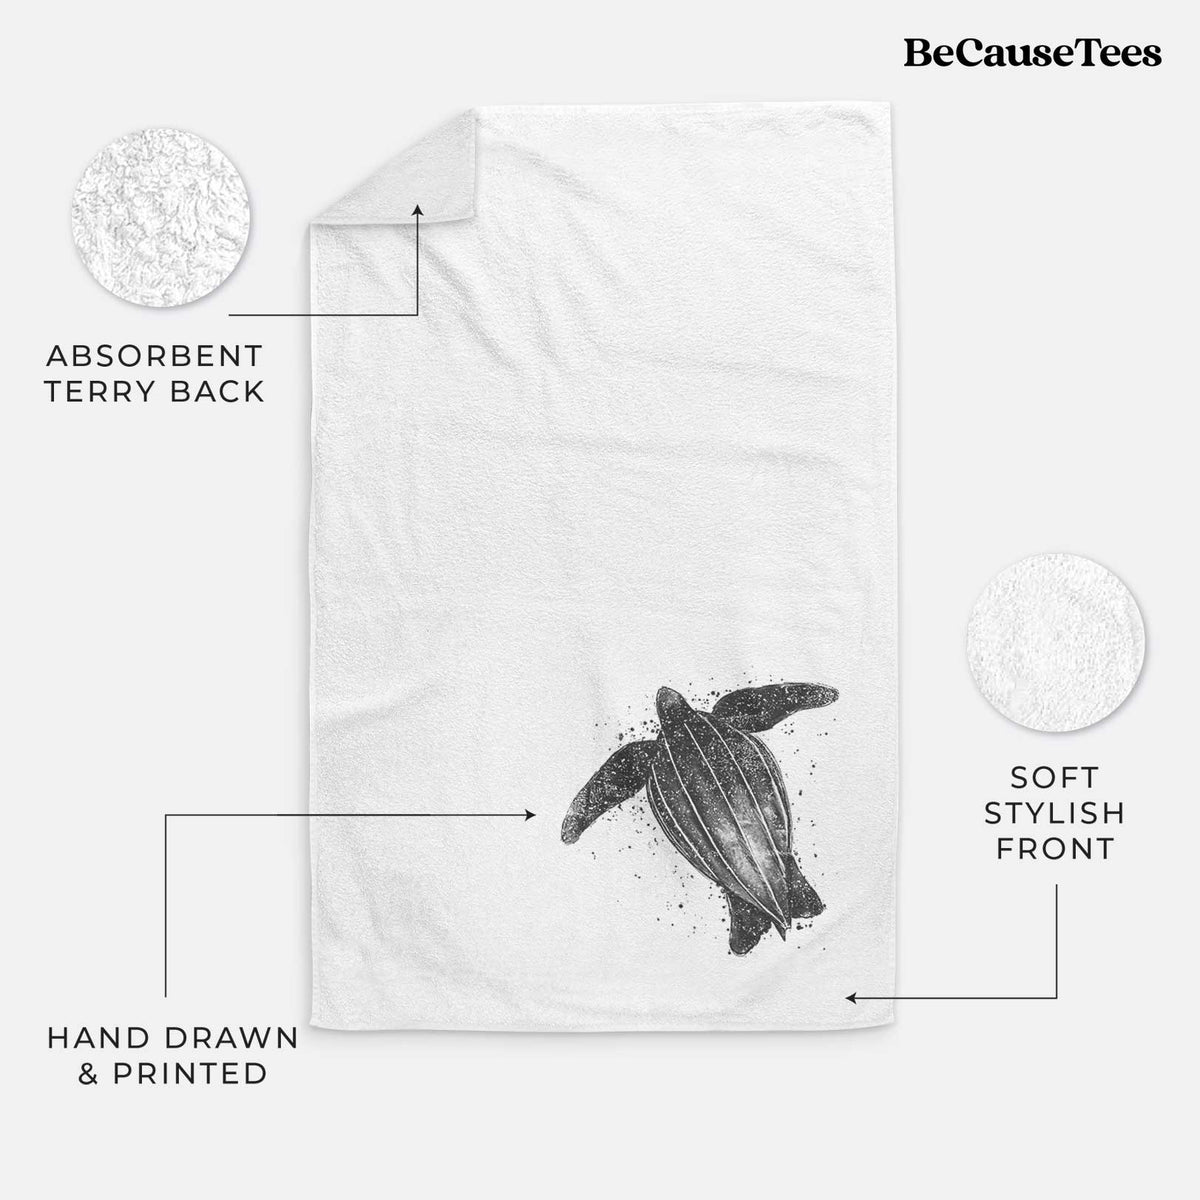 Leatherback - Dermochelys coriacea Hand Towel